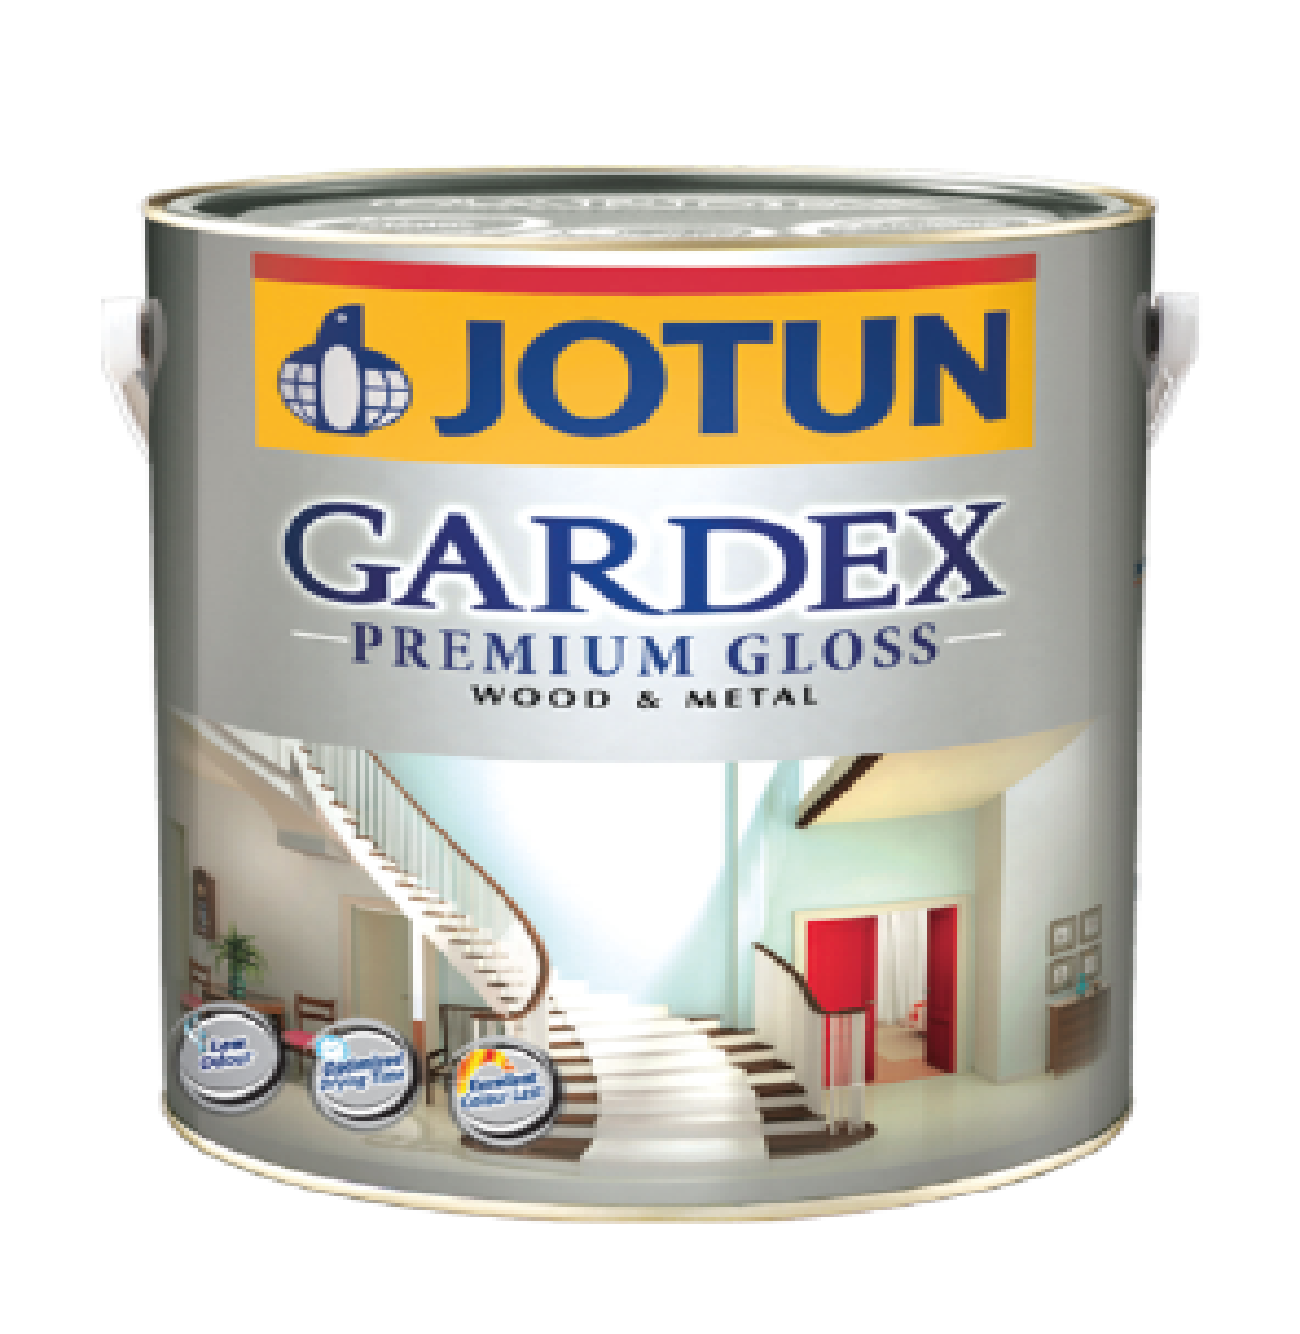 Gardex Premium Gloss can image